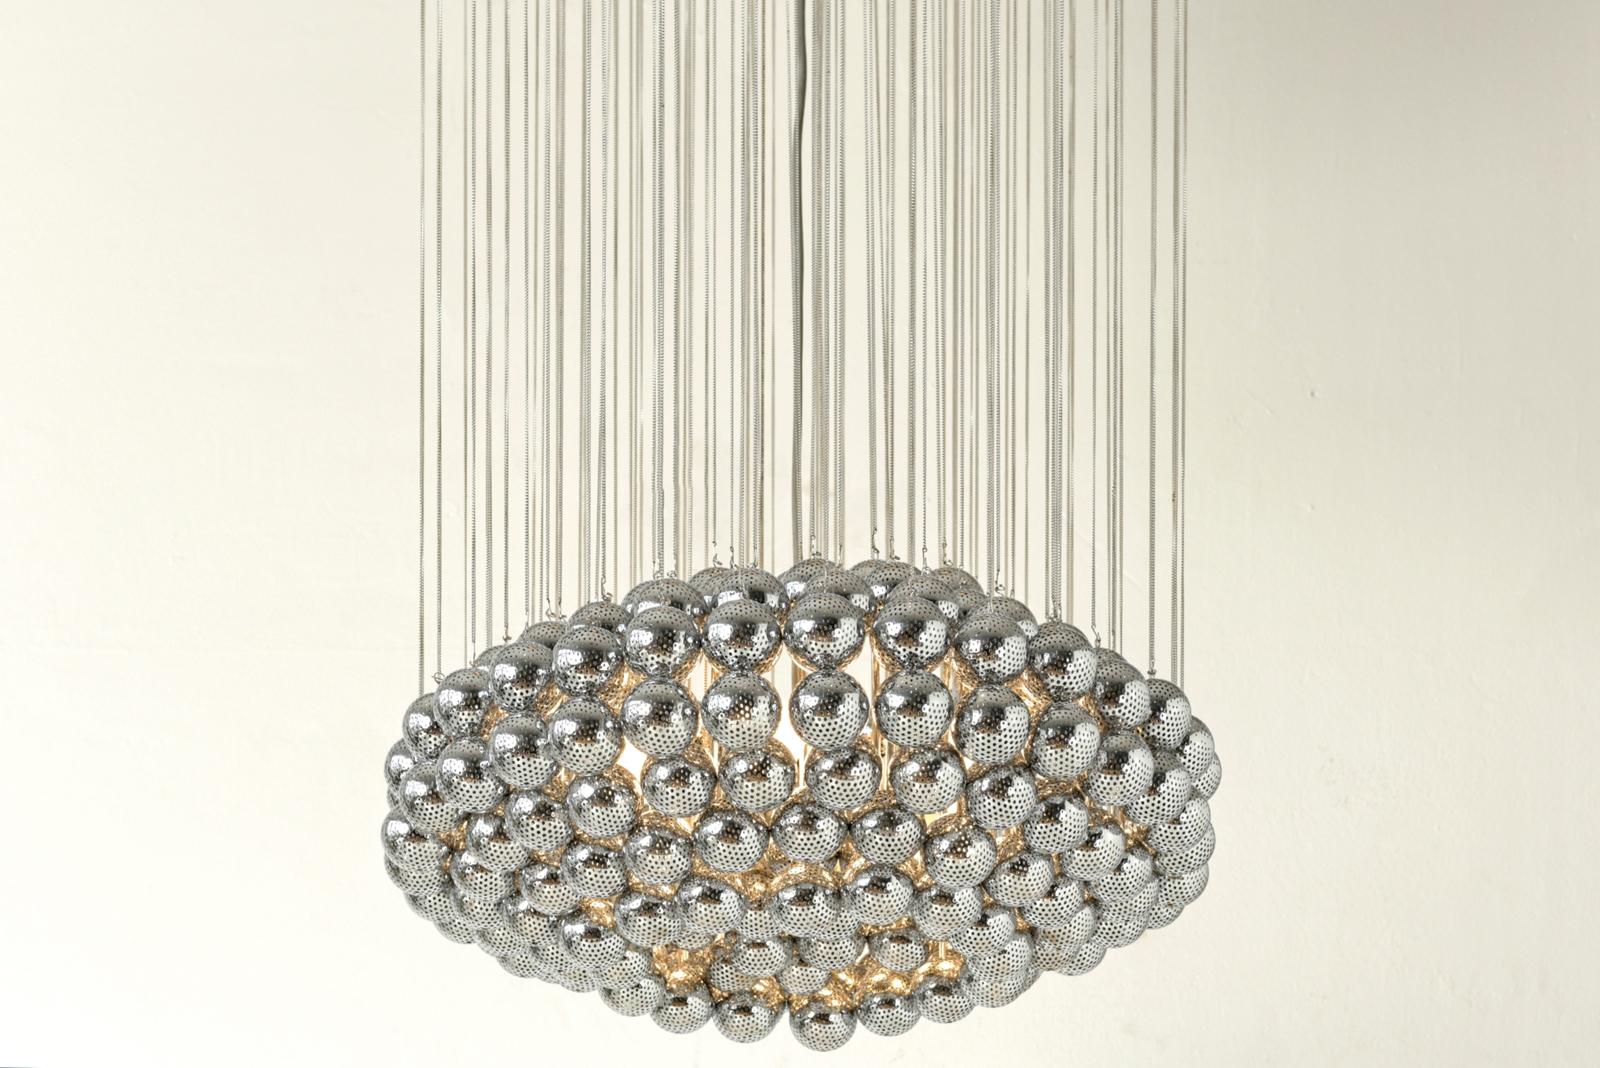 Metal Pendant Lamp attr. to Verner Panton, Switzerland - 1969 For Sale